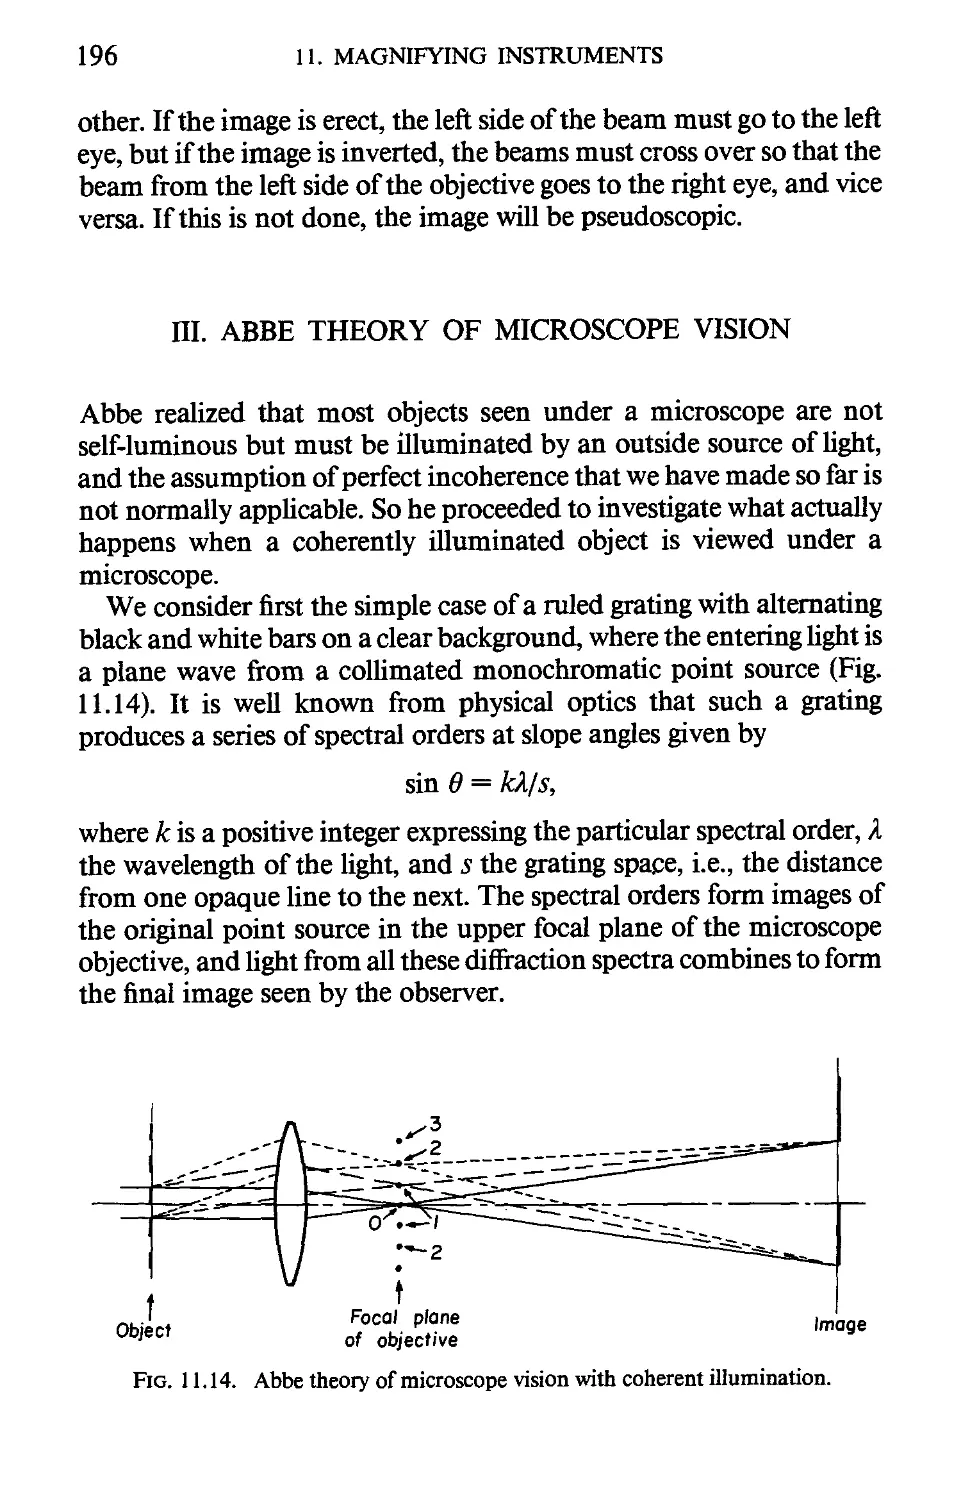 III. Abbe Theory Of Microscope Vision